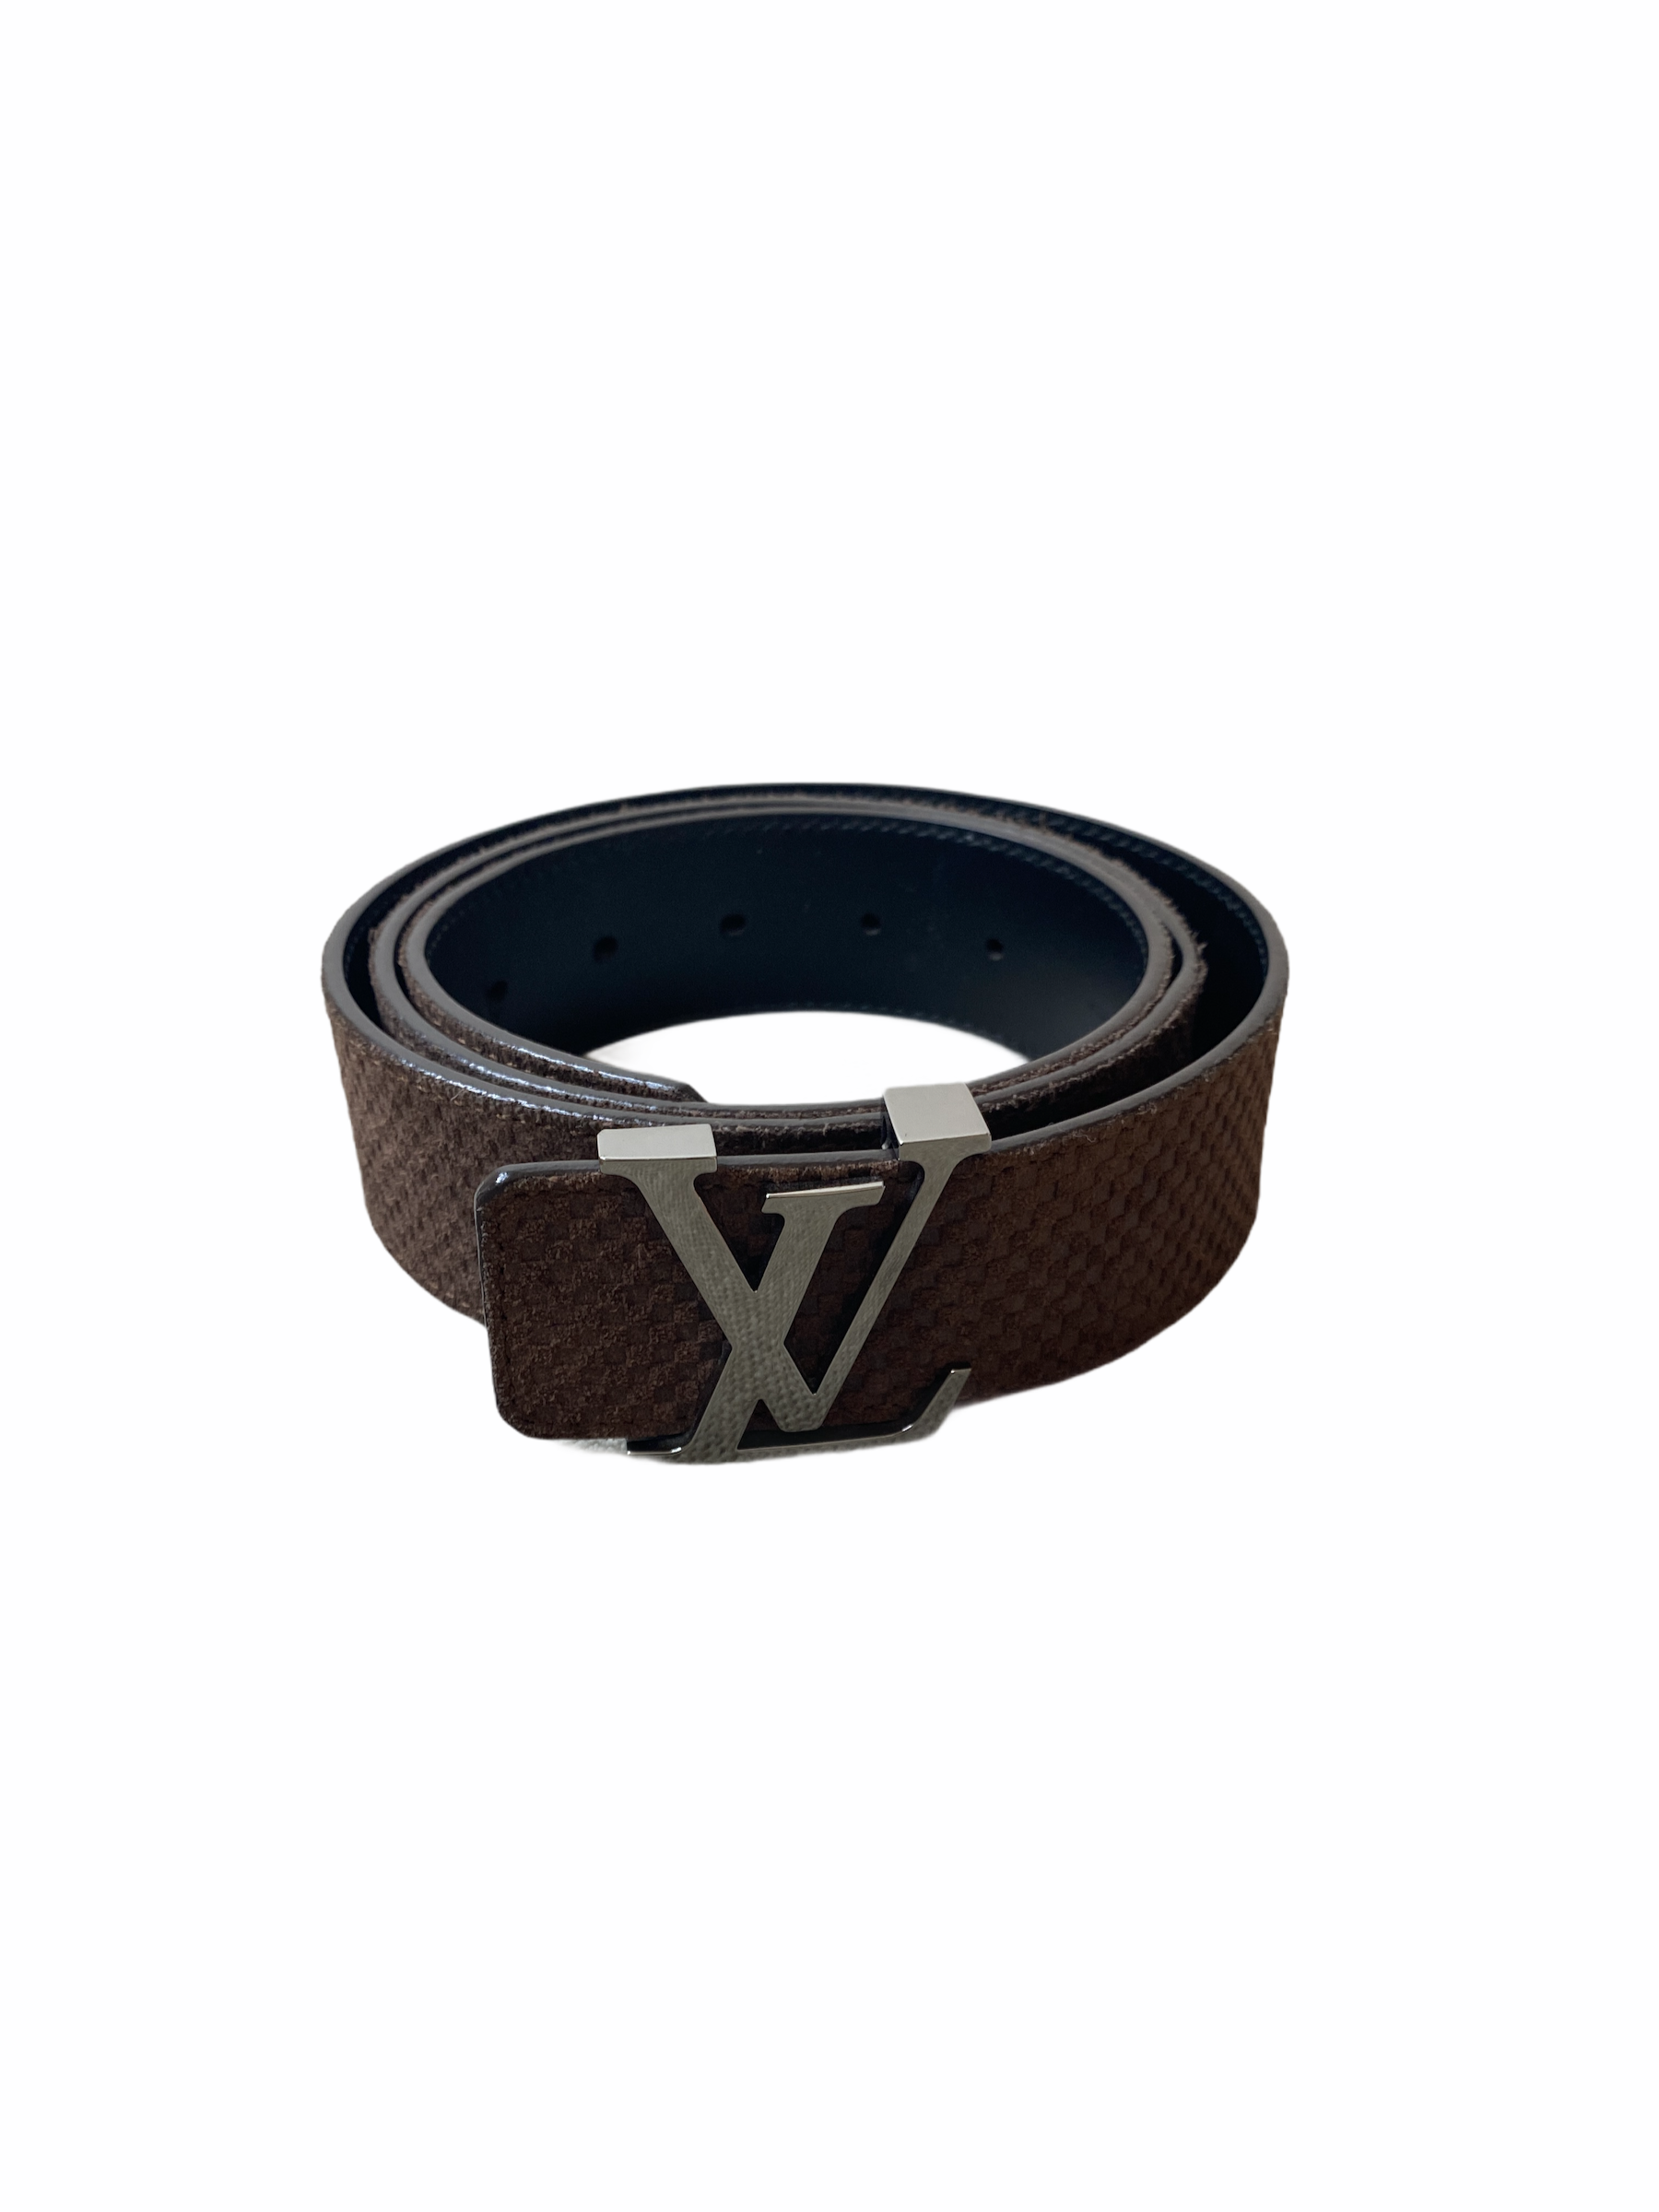 W2C - Bracelet Louis Vuitton : r/FrenchReps